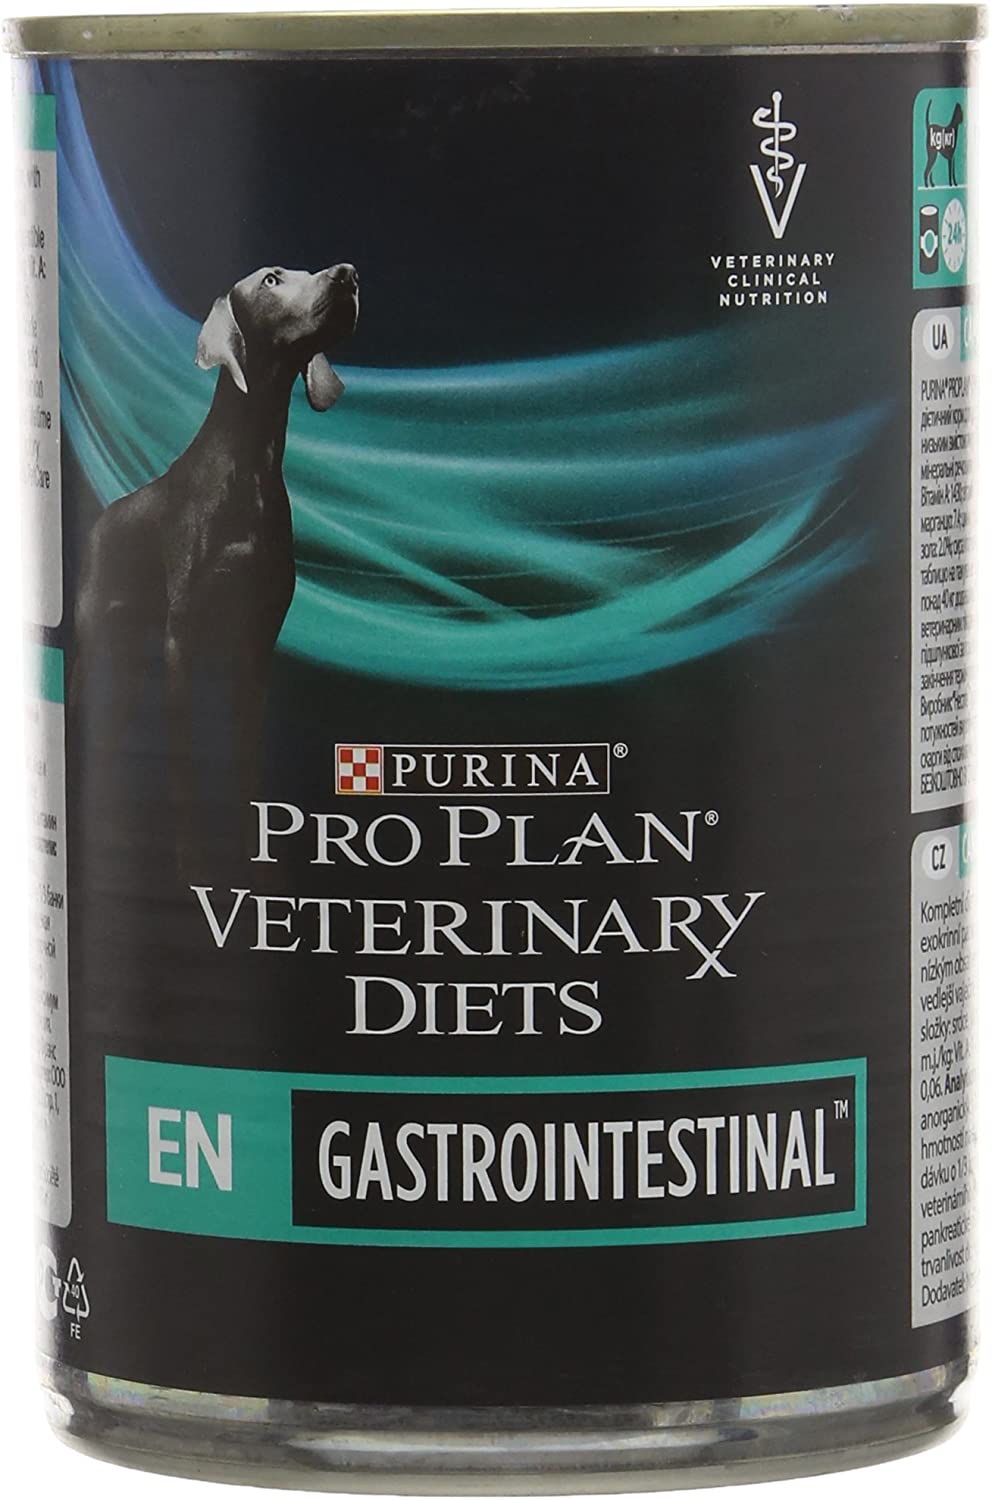  Pienso seco Pro Plan de Purina, Dieta Veterinaria Canina, Dieta gastrointestinal 